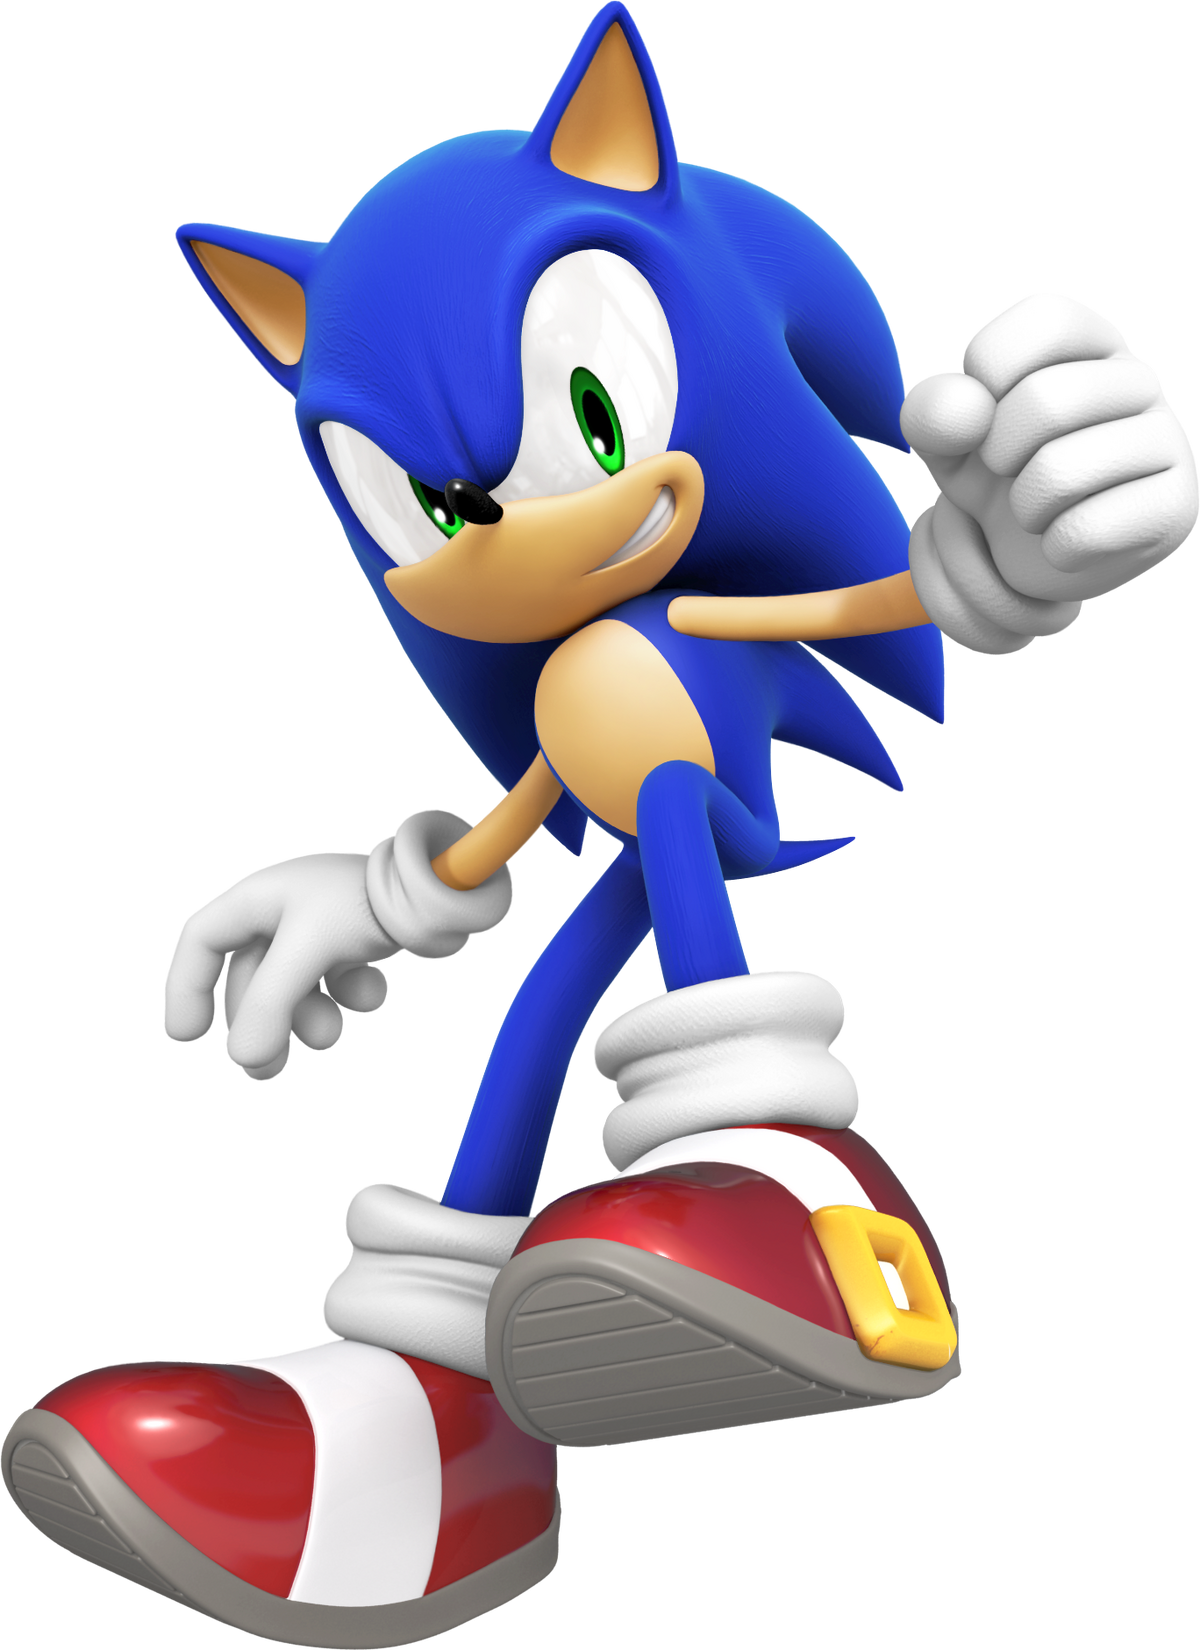 Sonic Colors: Remastered, Disney Fanon Wiki